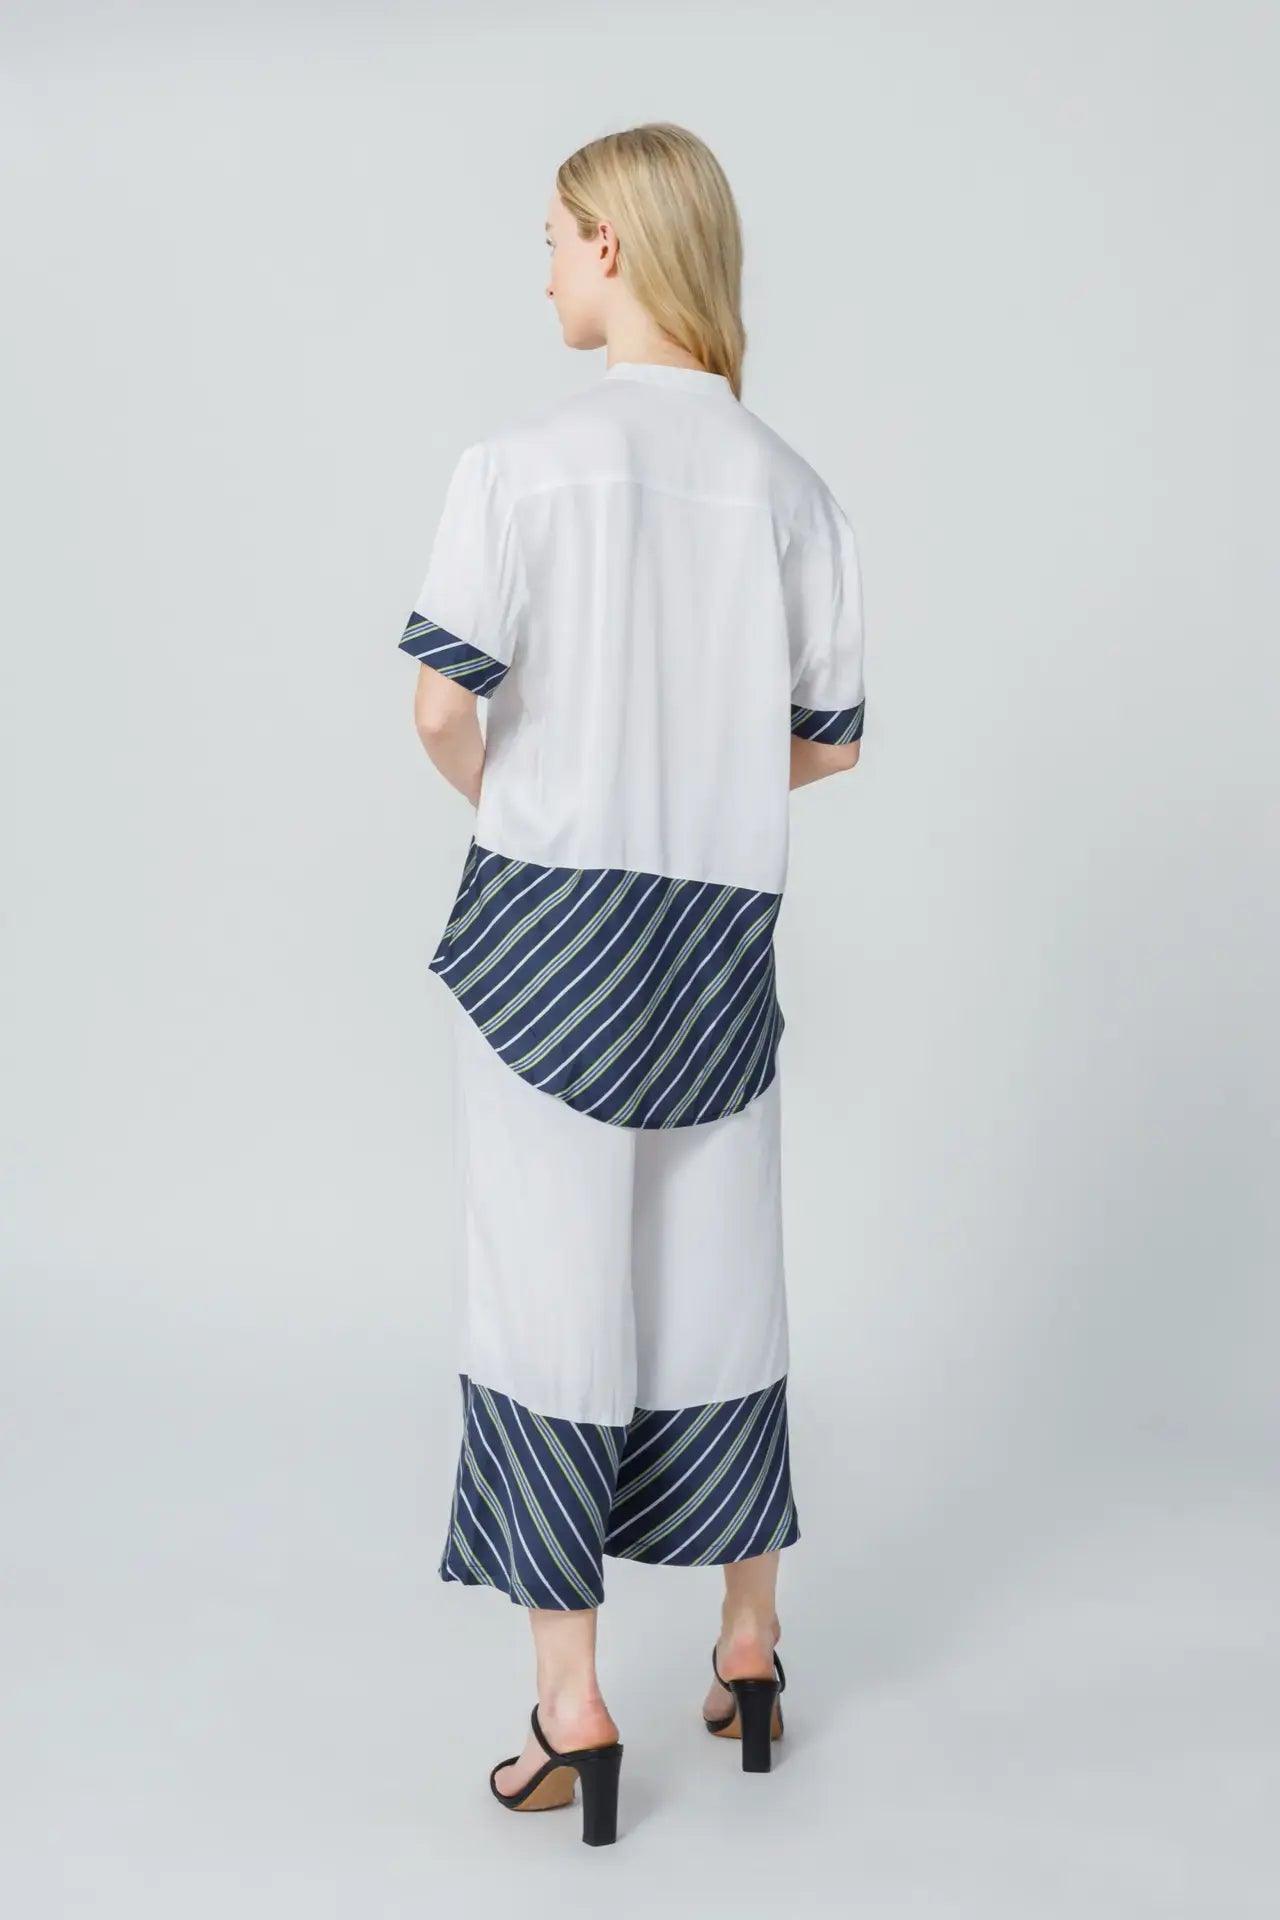 Women's Stripe Inset Cropped Pajama Pants, Womens Pants